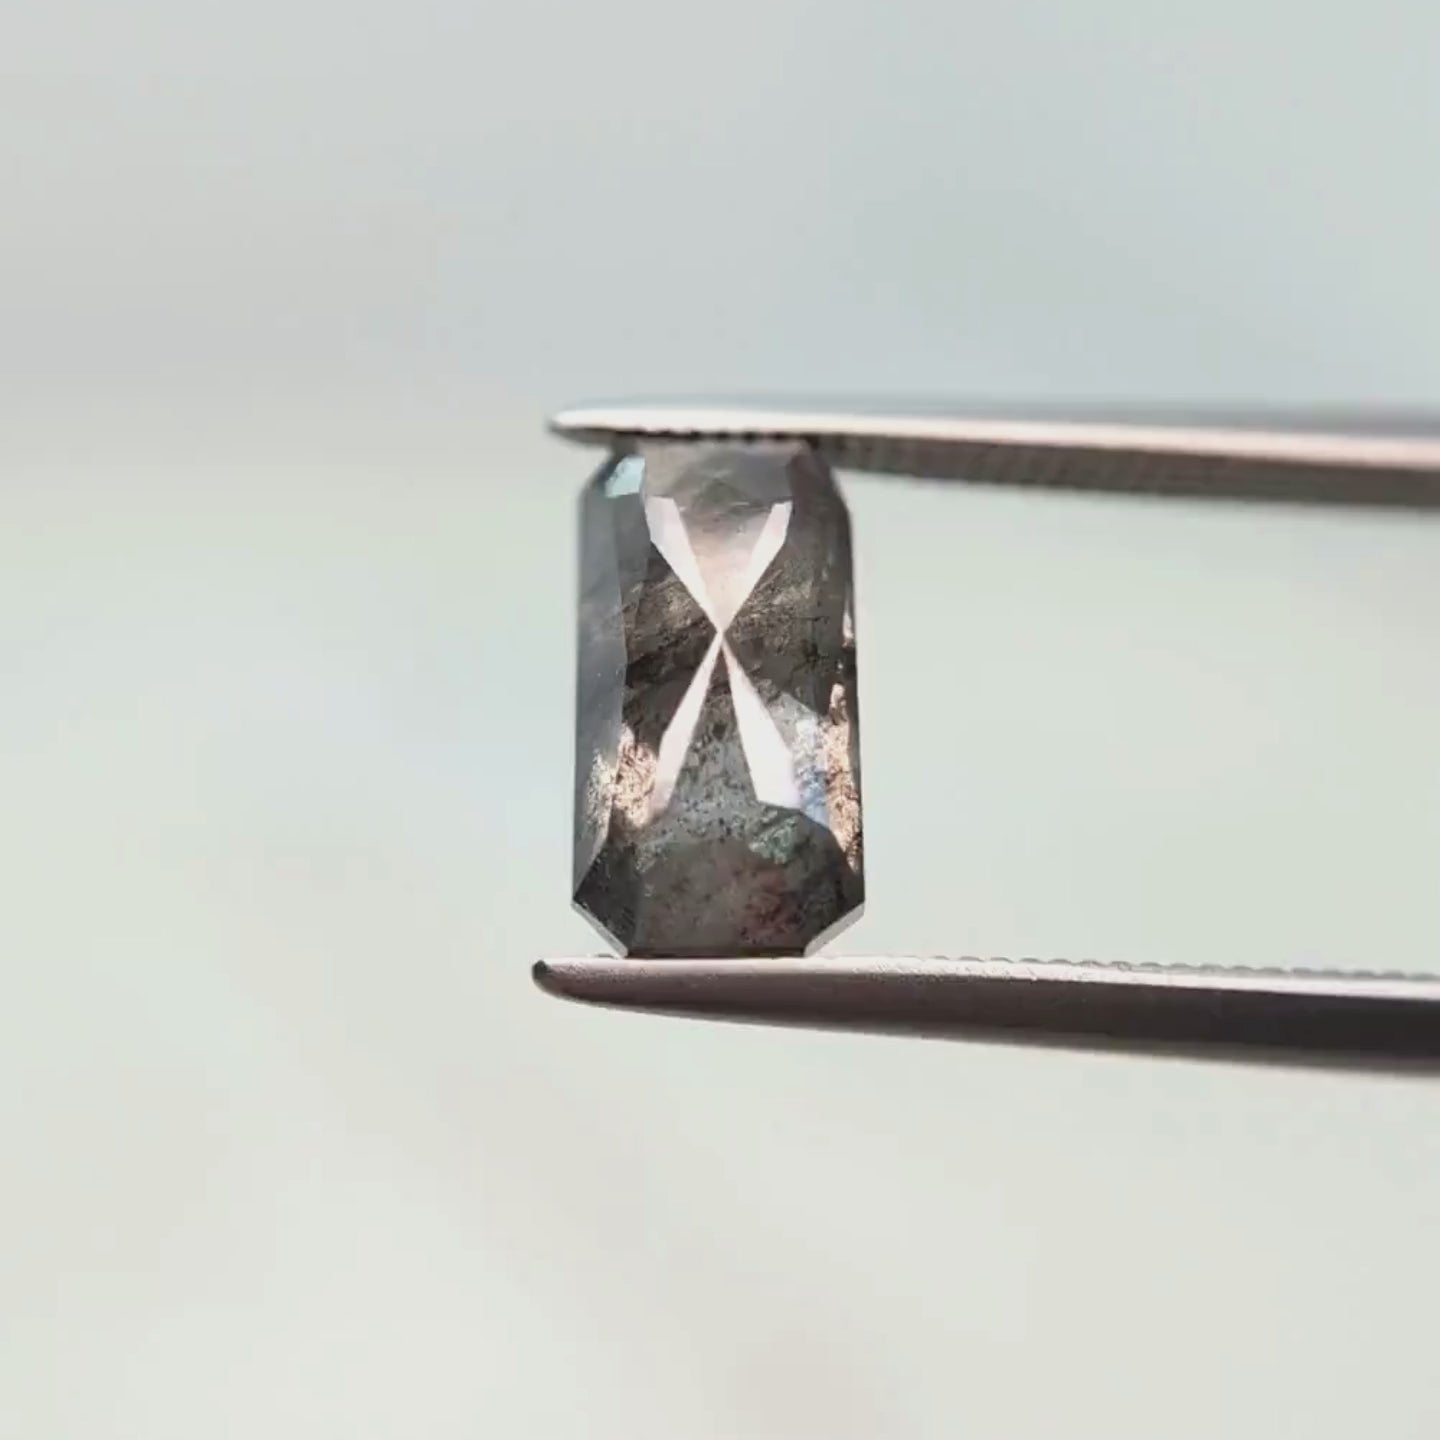 1.83 Carat Dark Gray Celestial Emerald Cut Diamond for Custom Work - Inventory Code DSE183